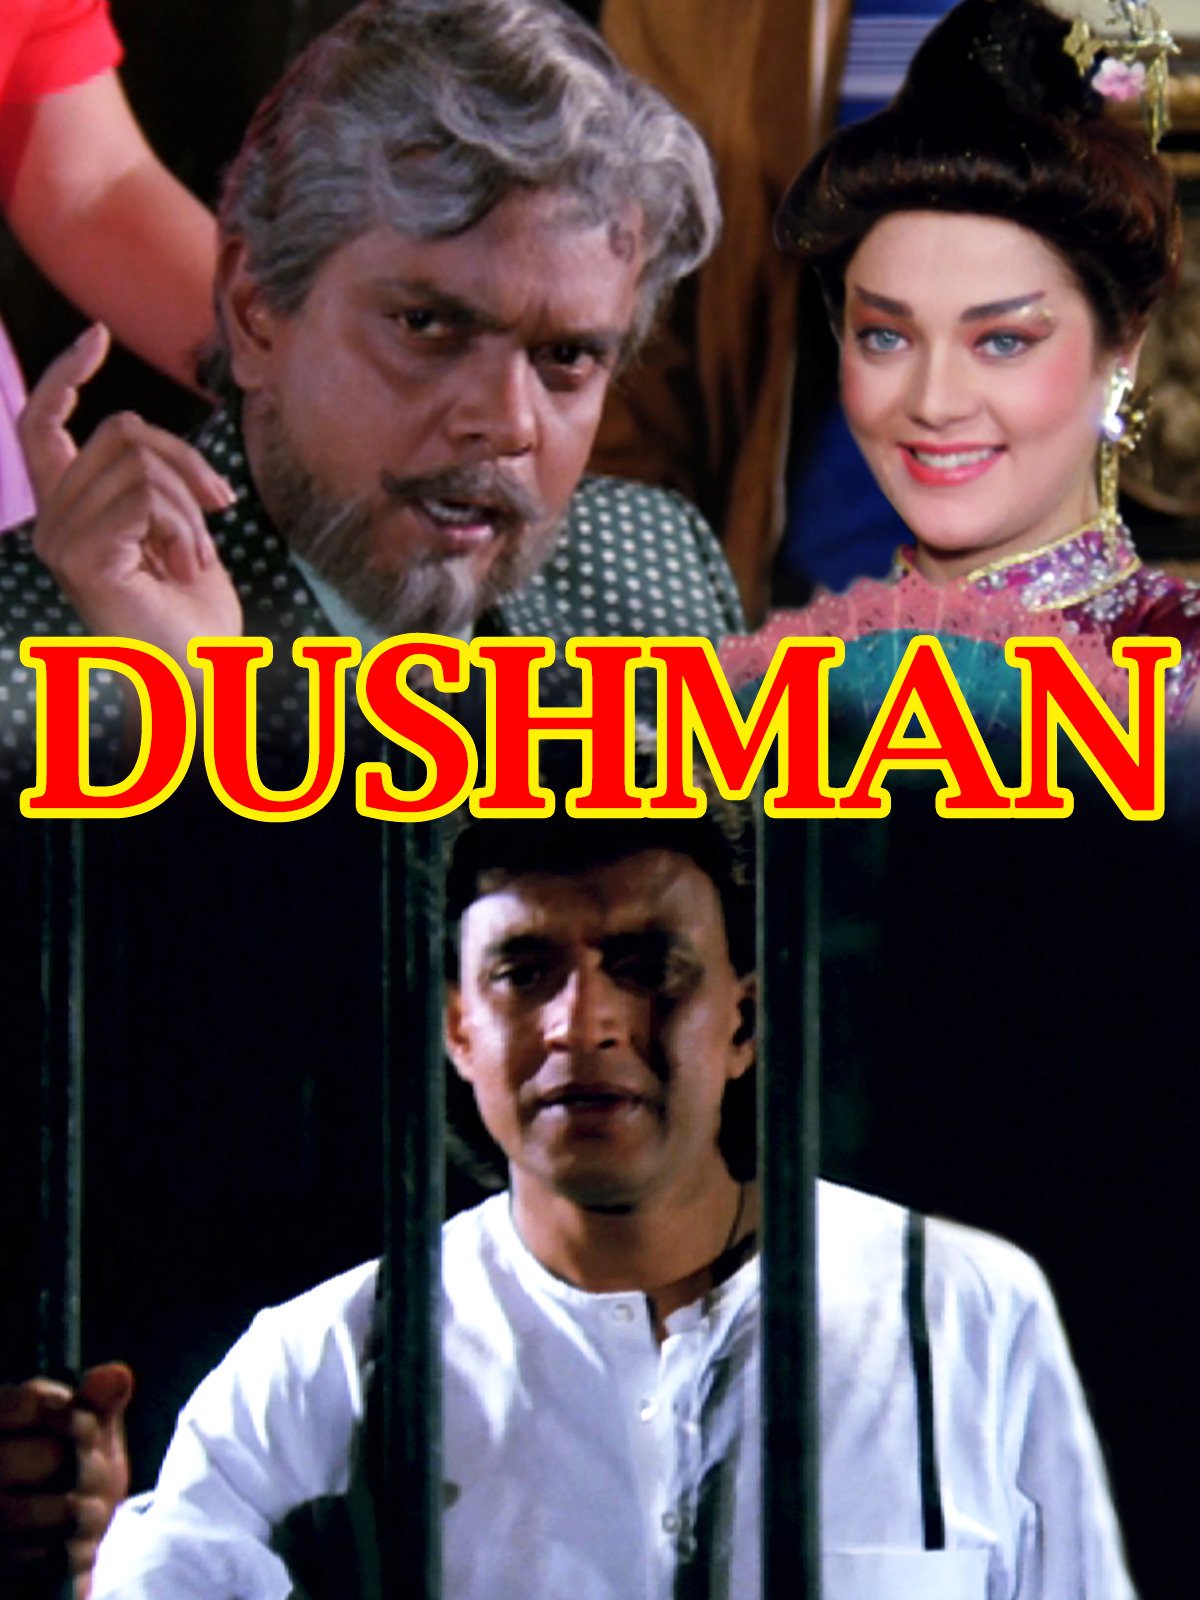 Dushman movies songs pk